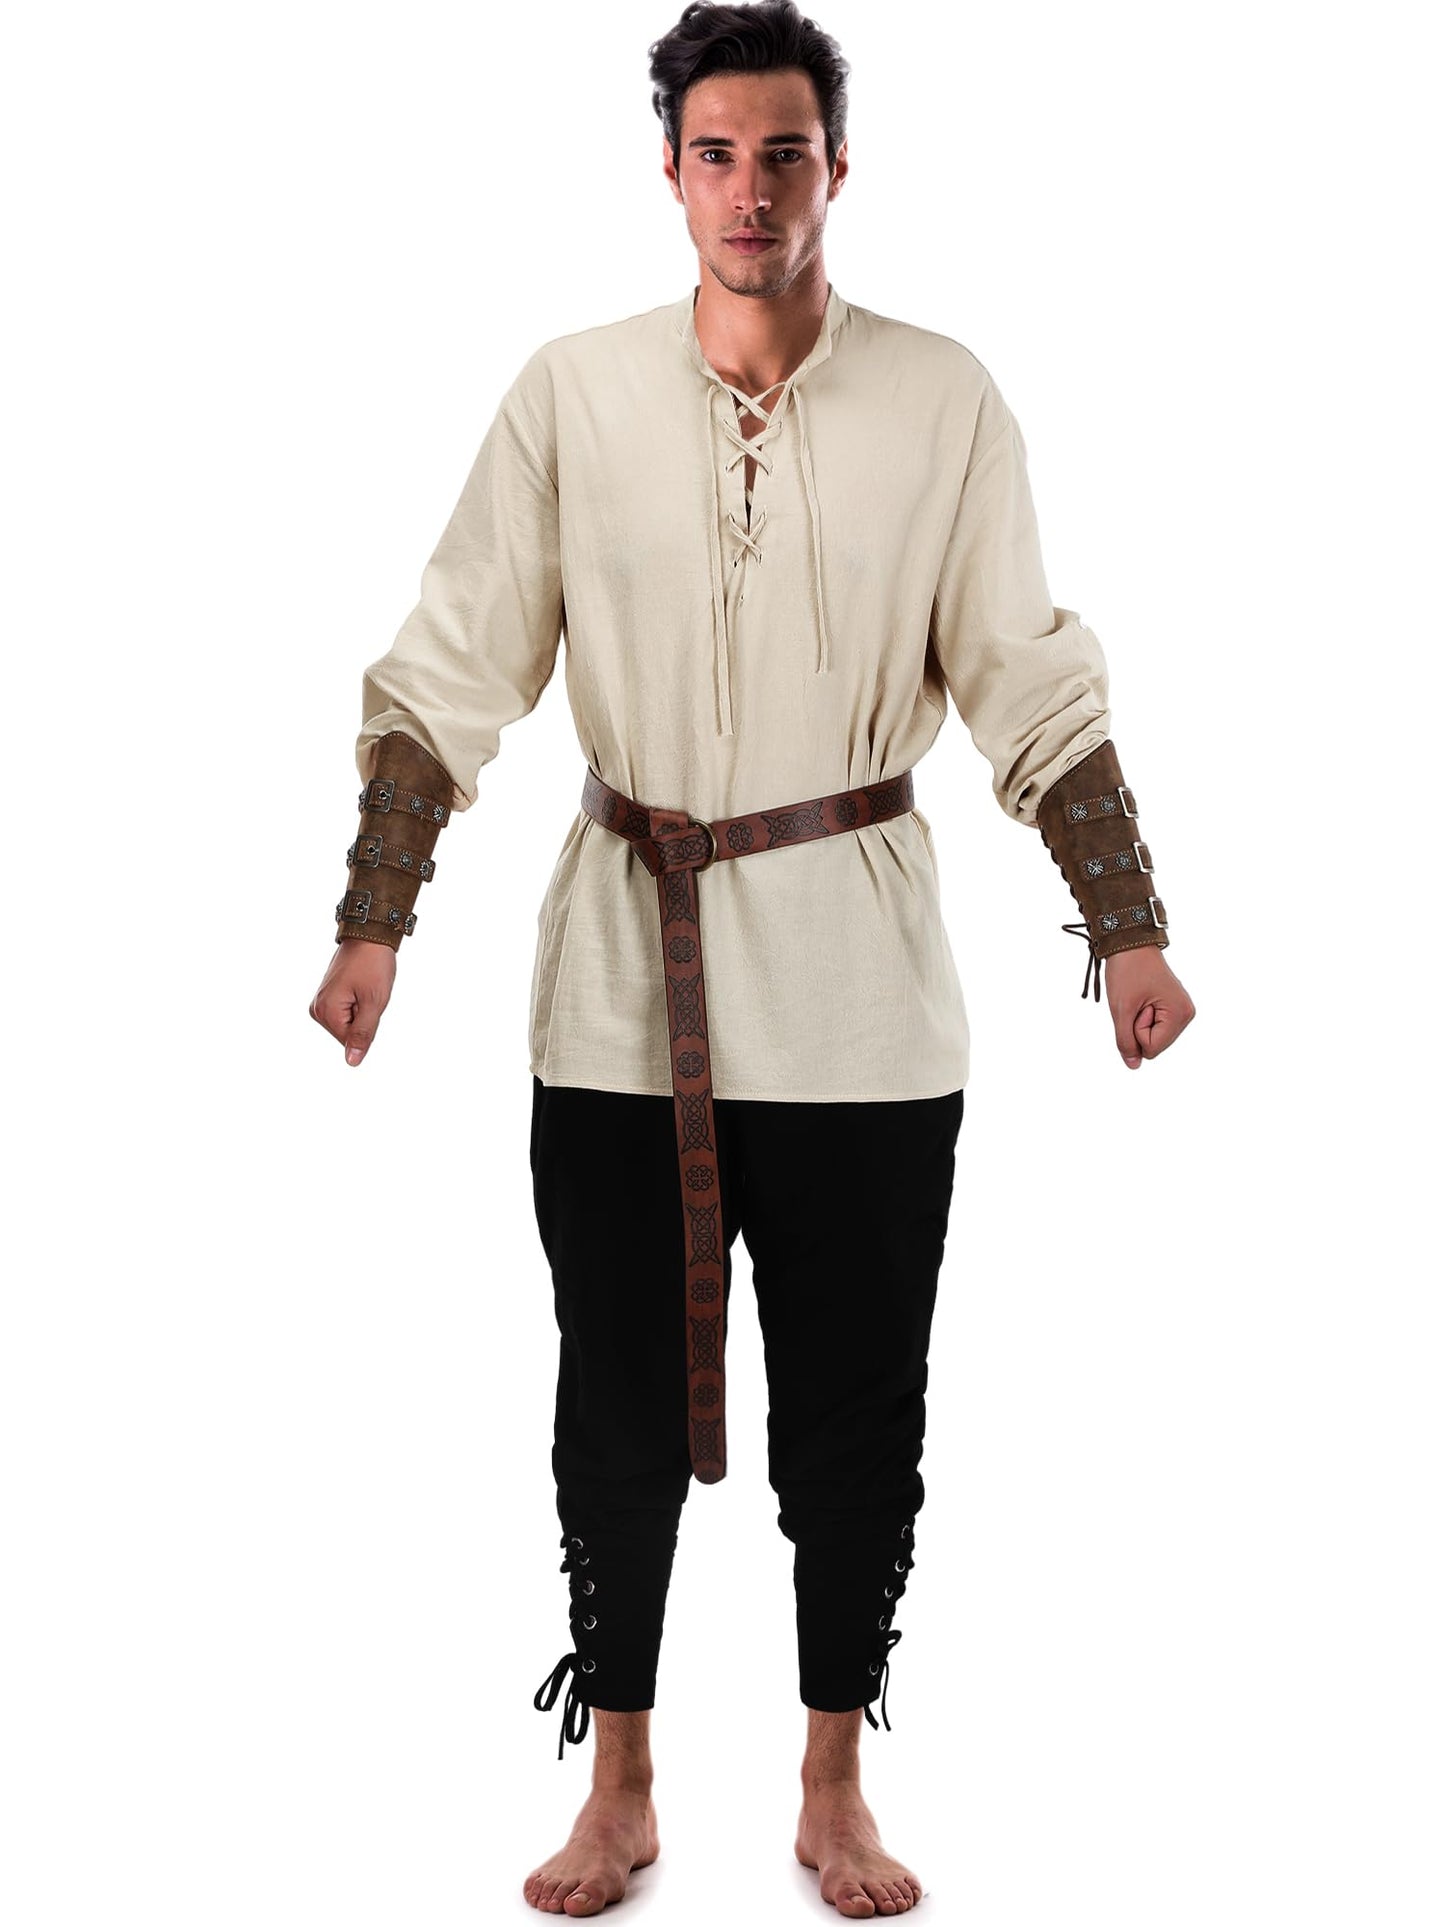 Jiuguva 4 Pcs Halloween Men's Renaissance Costume Set Medieval Pirate Shirt Ankle Banded Pants Viking Belt Accessories Classic Color Large